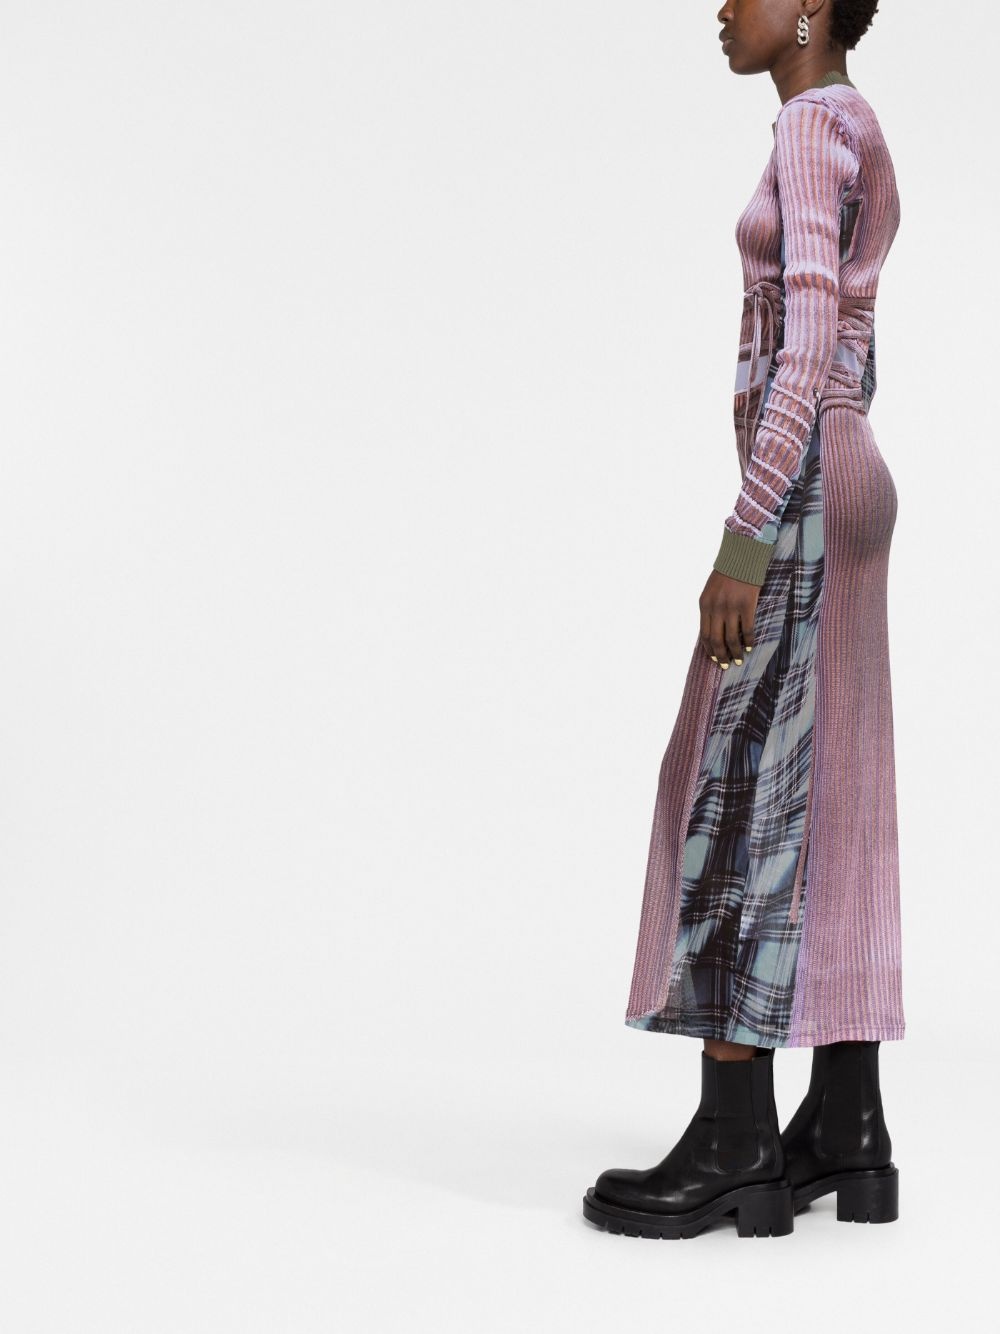 x Jean Paul Gaultier Trompe L'oeil printed dress - 6